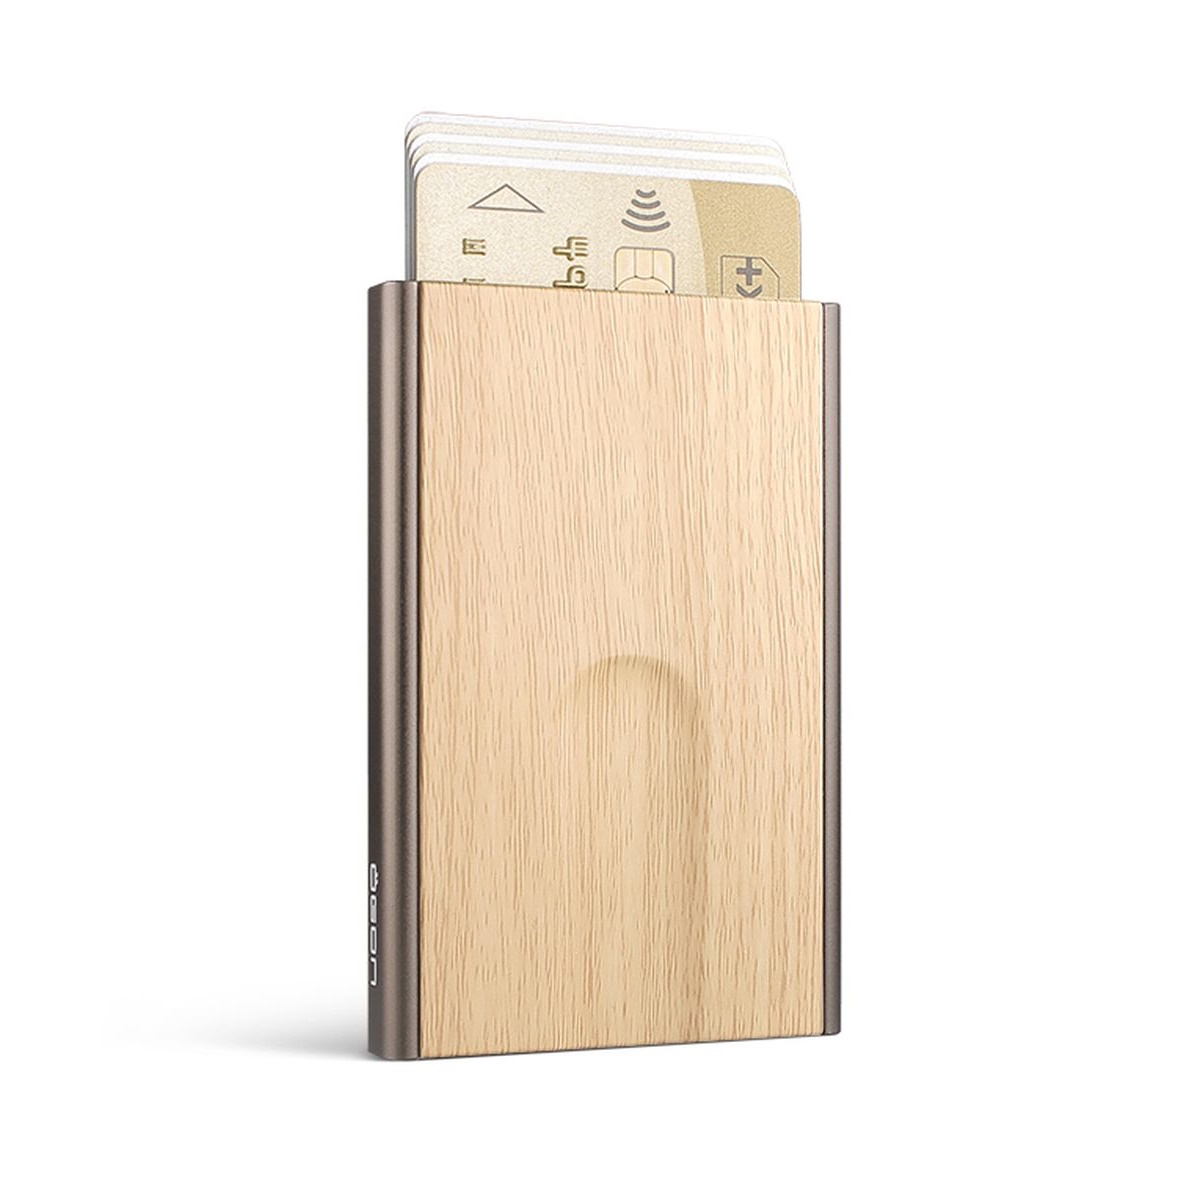 Slider Aluminum Wallet - Wood imitation Bamboo